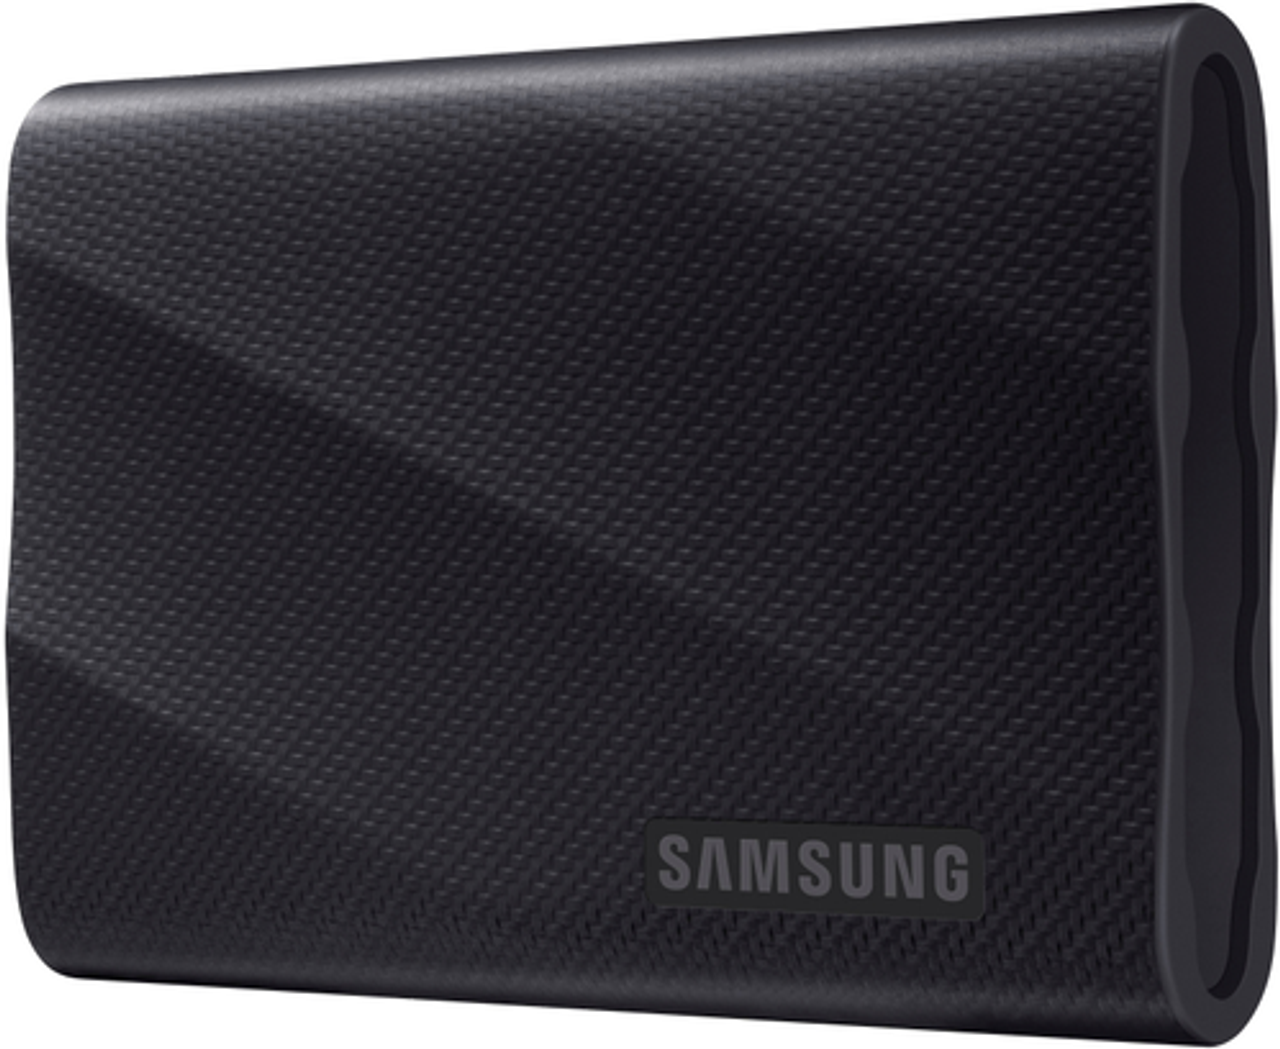 Samsung - Geek Squad Certified Refurbished T9 Portable SSD 2TB, Up to 2,000MB/s, USB 3.2 Gen2 - Black